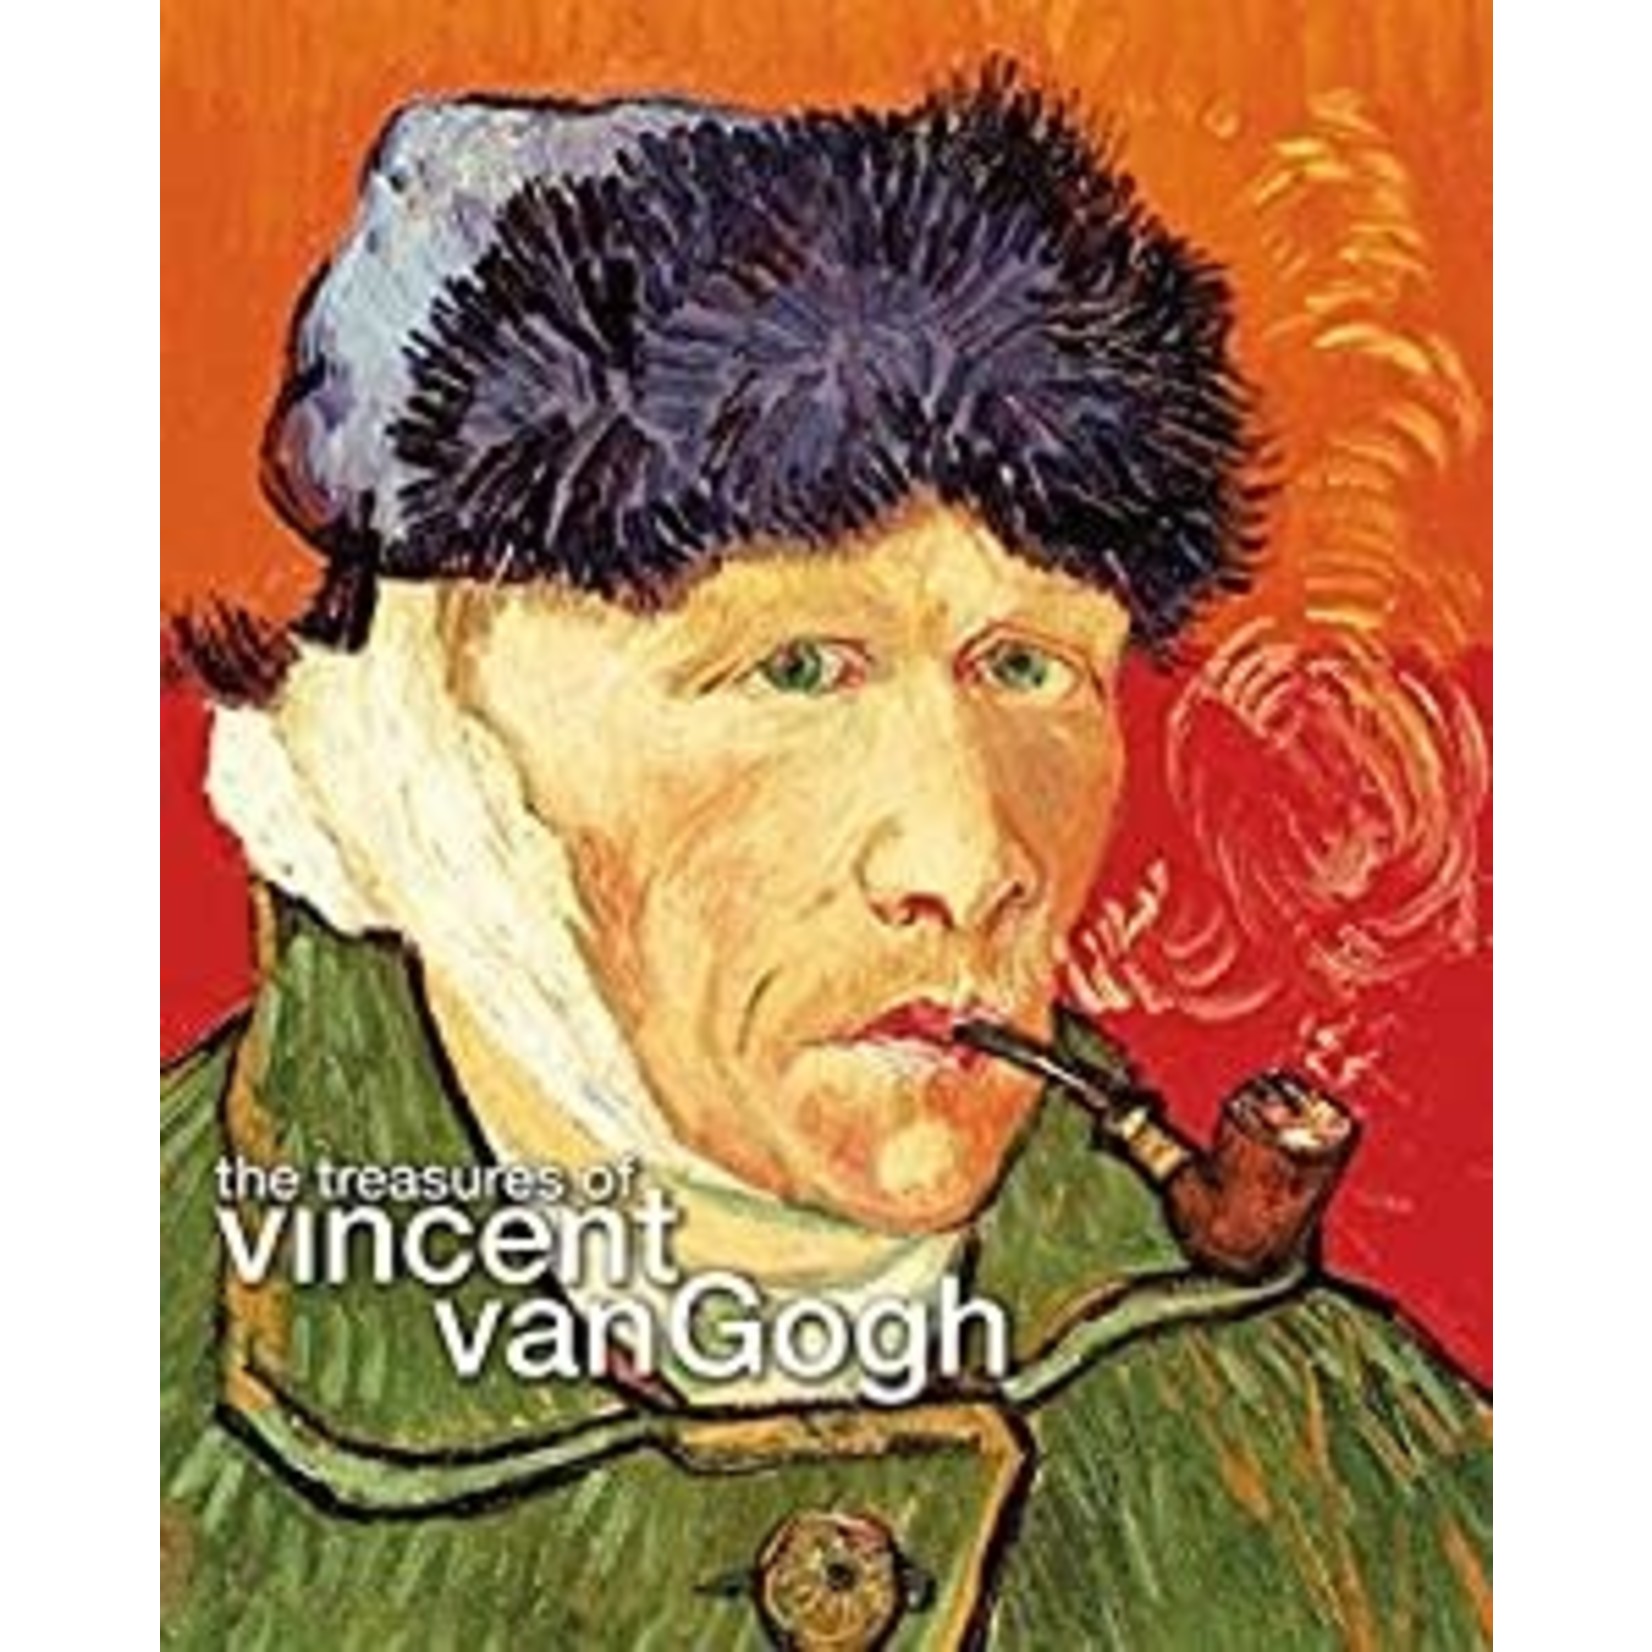 Homburg, Cornelia Homburg, Cornelia (Art) - The Treasures of Vincent Van Gogh